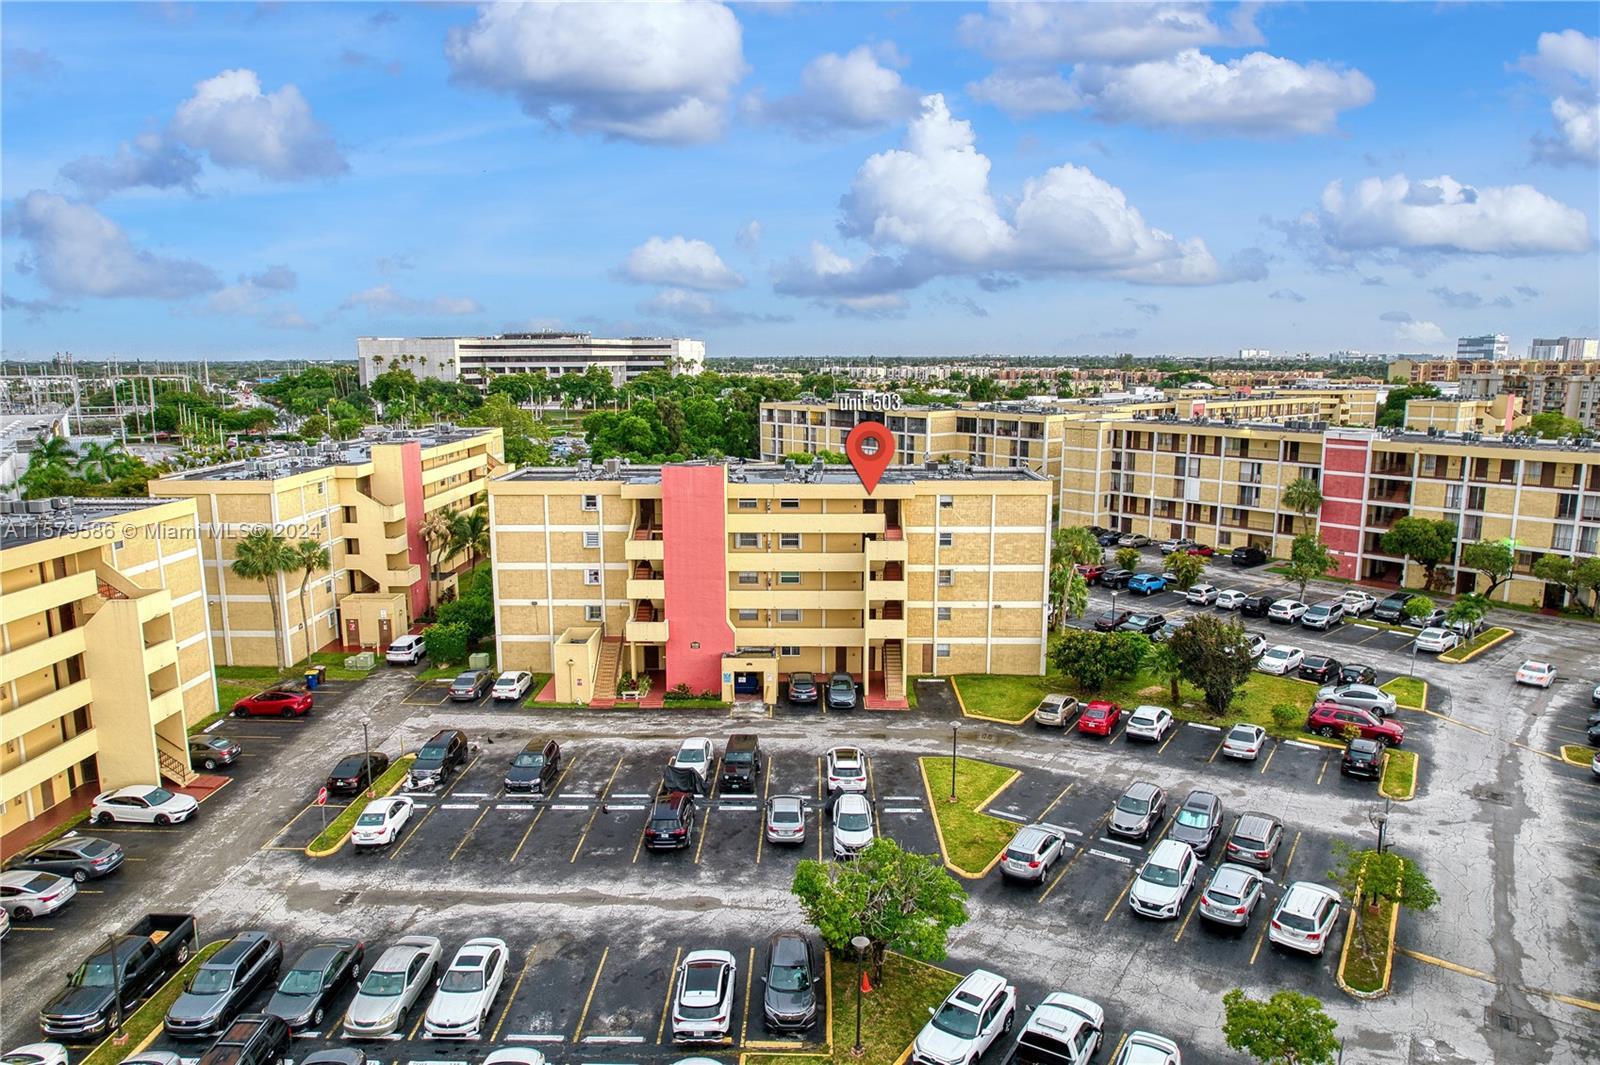 Photo of 9190 Fontainebleau Blvd #503 in Miami, FL